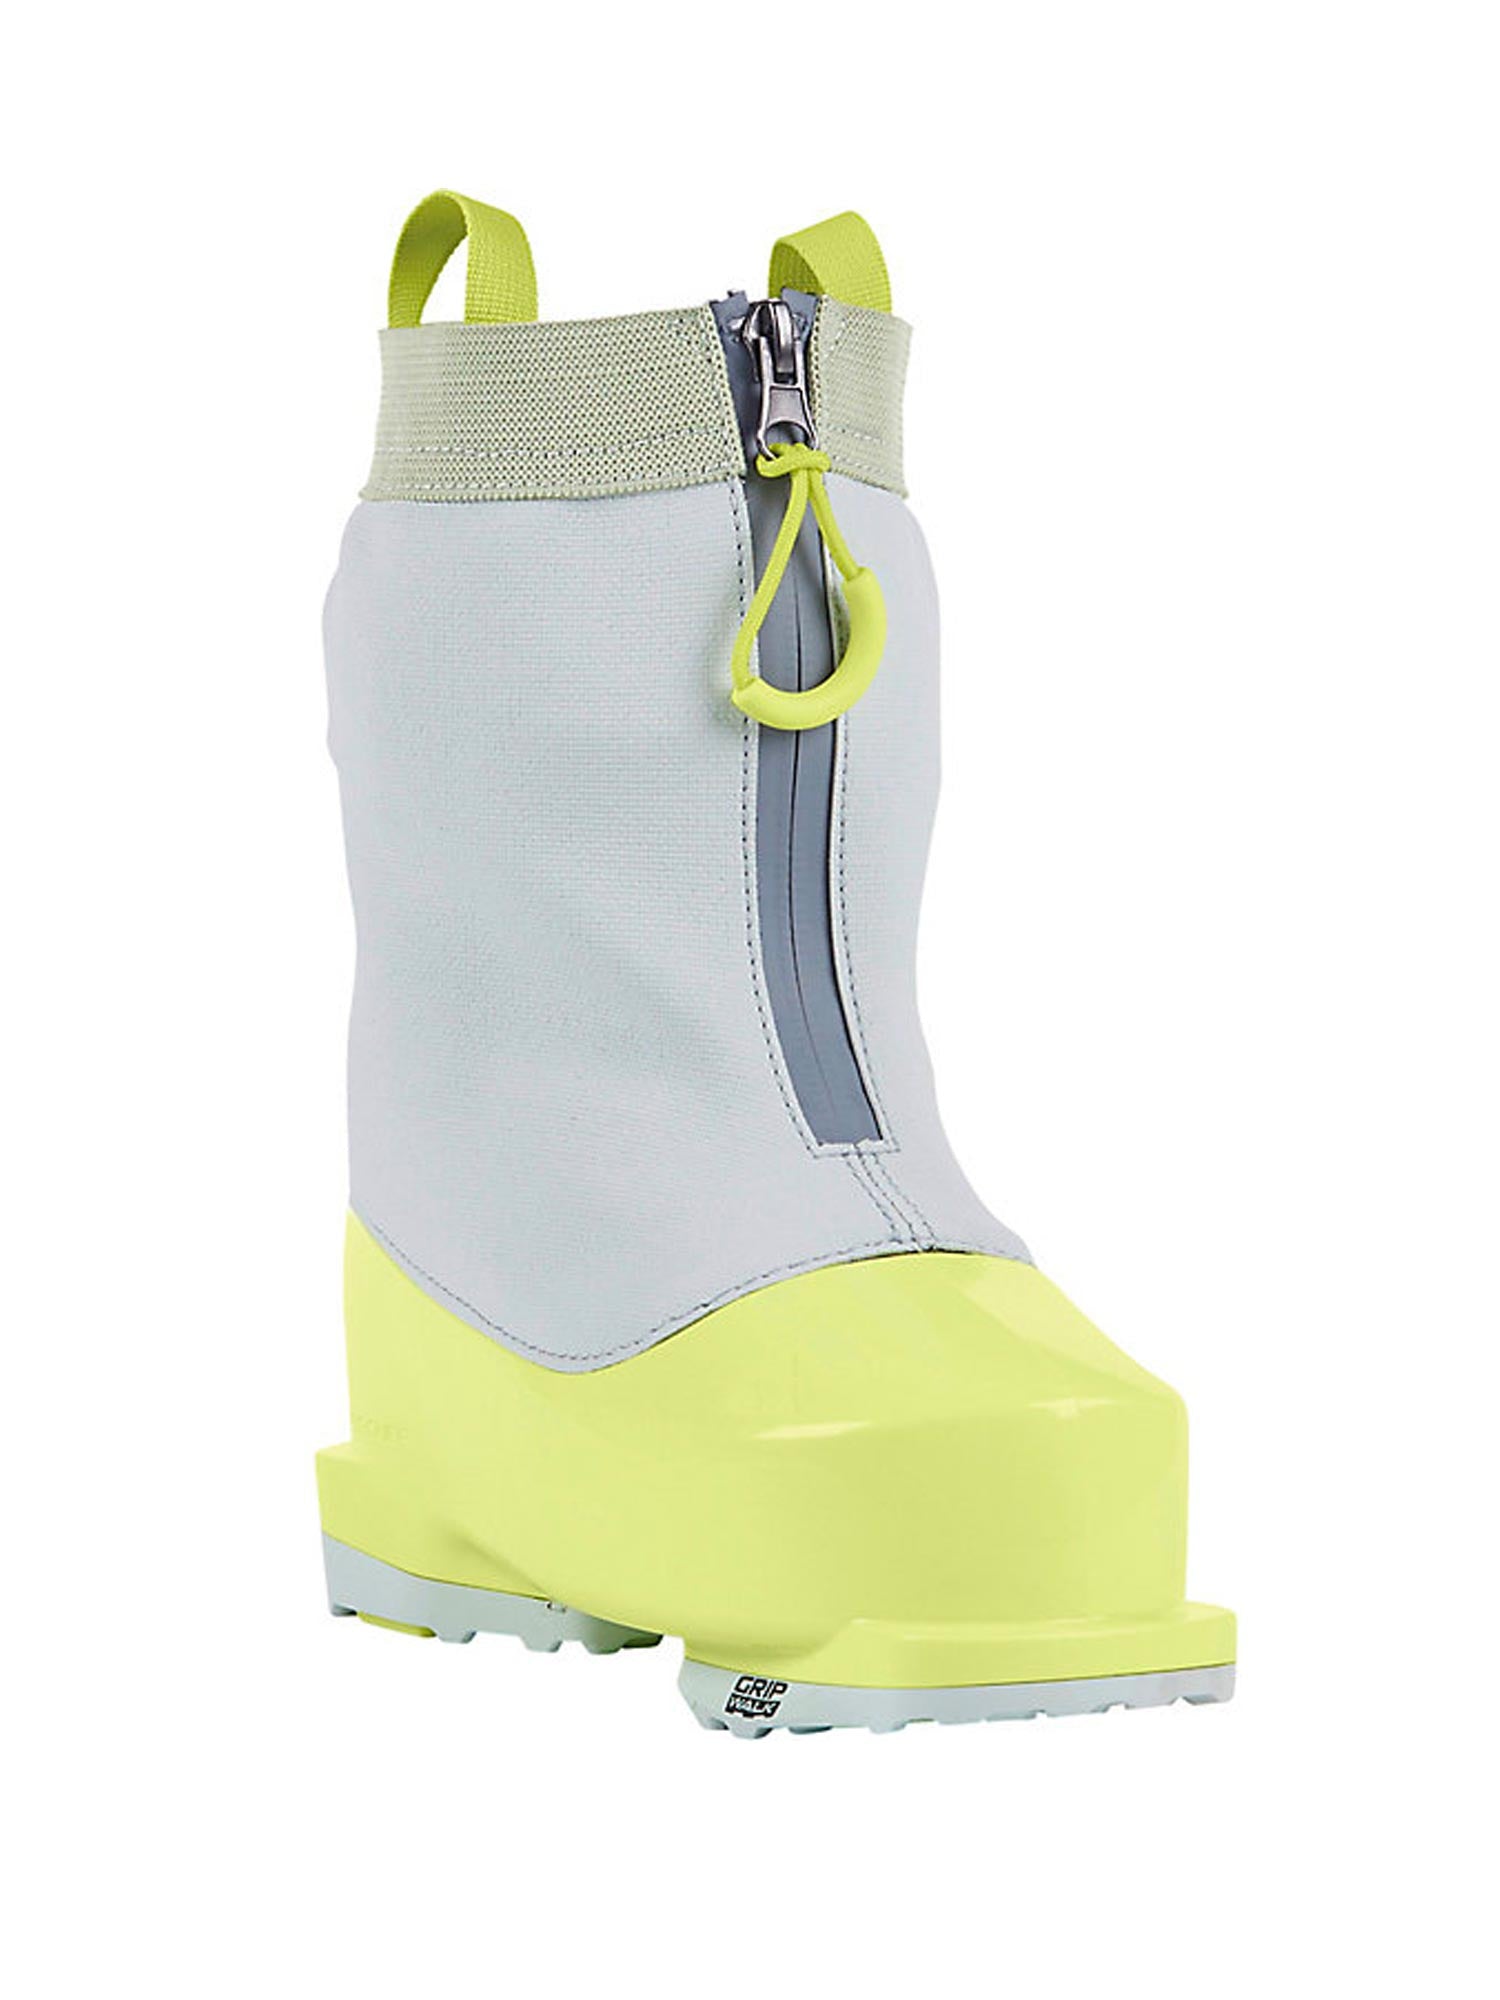 Kids Fischer One ski boots with zipper,  gray & yellow